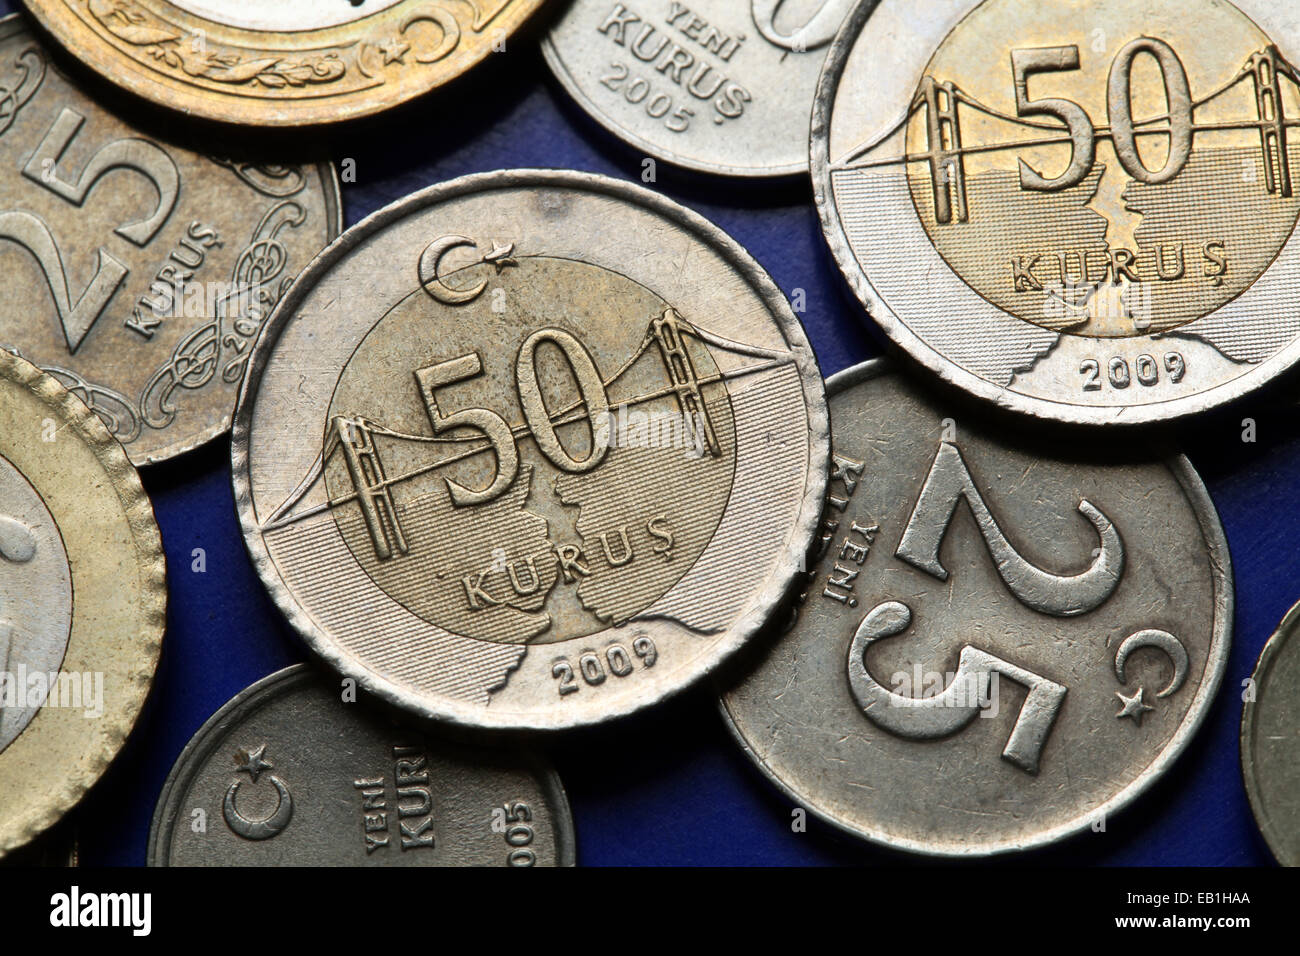 Coins of Turkey. Bosphorus Bridge over the Bosphorus strait in Istanbul depicted in the Turkish 50 kurus coin. Stock Photo